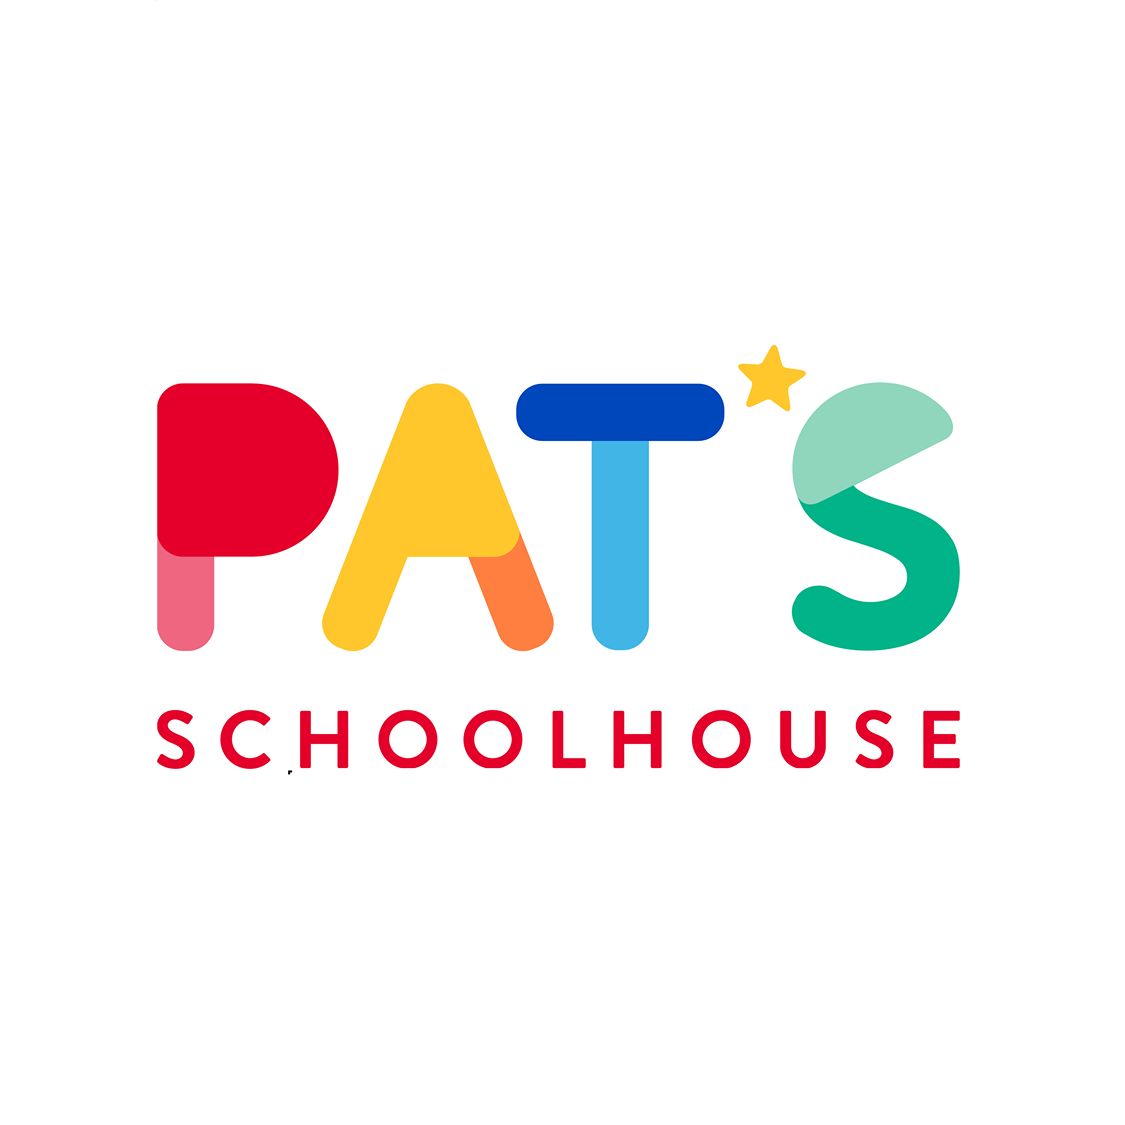 pat's schoolhouse | education in singapore